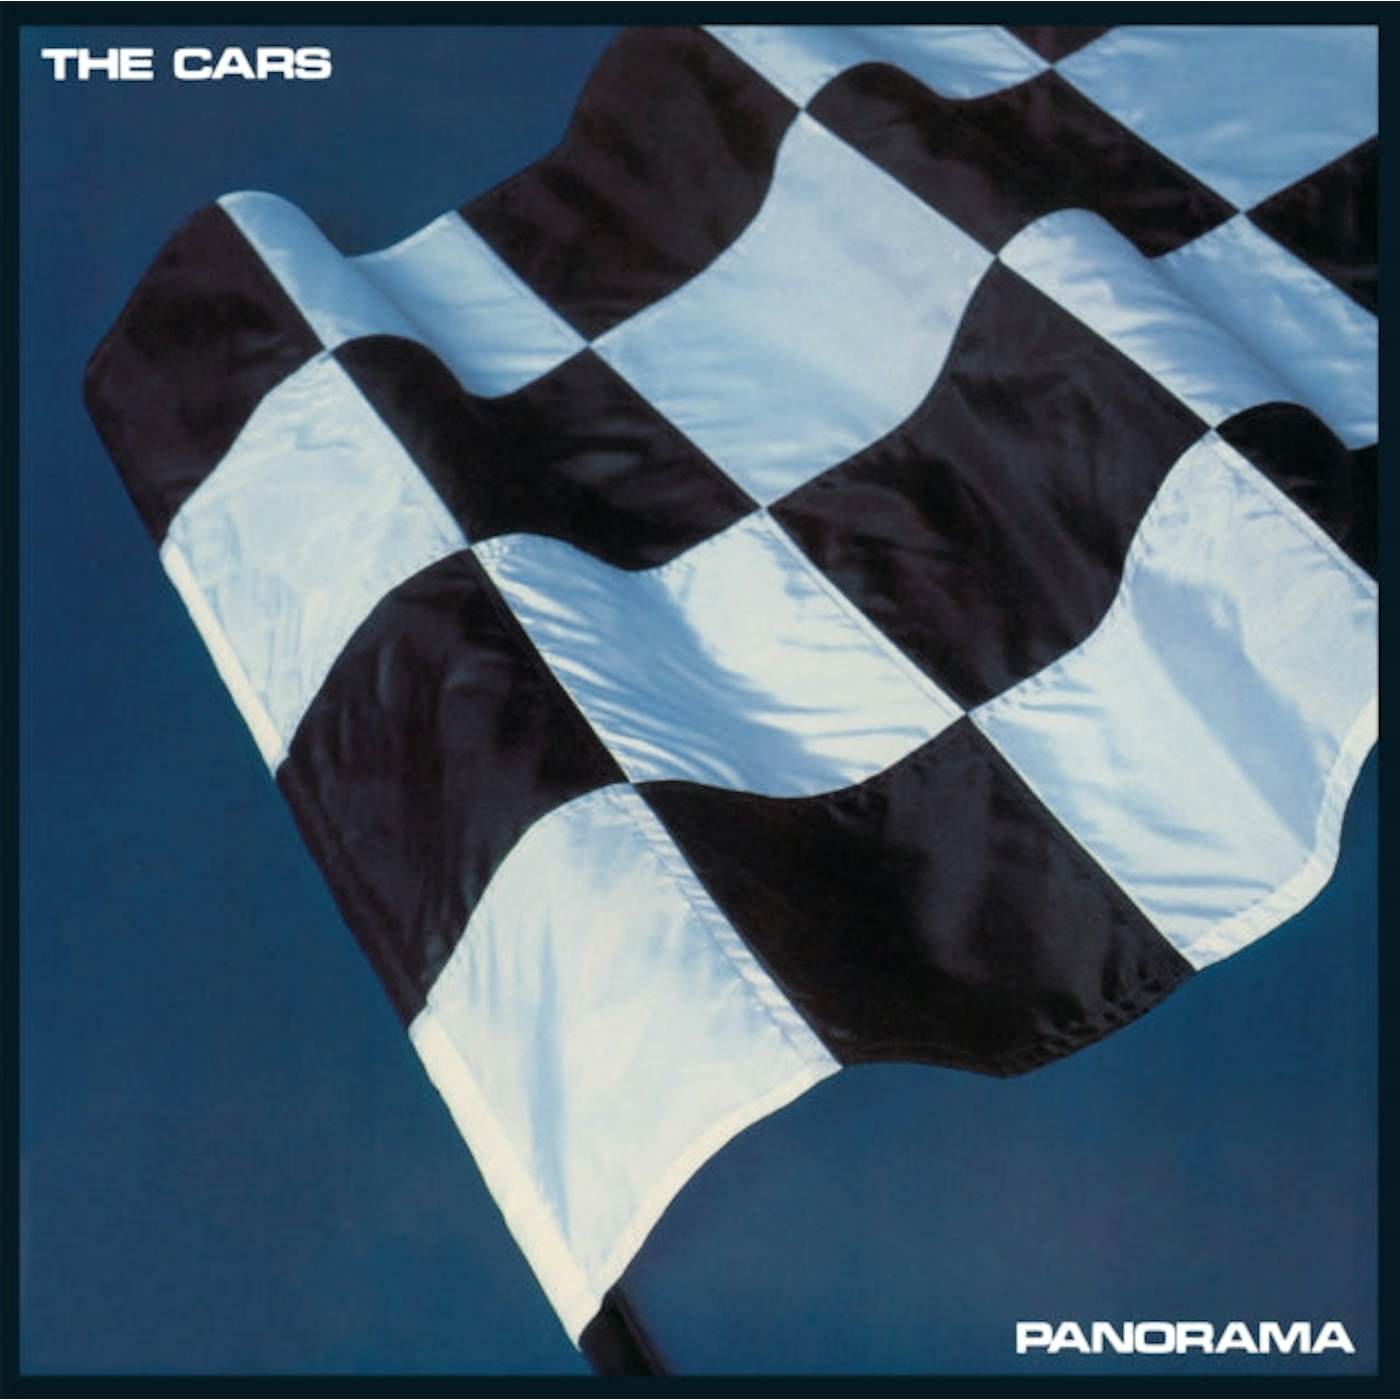 The Cars LP Vinyl Record - Panorama (Cobalt Blue Translucent Vinyl) (Rocktober)